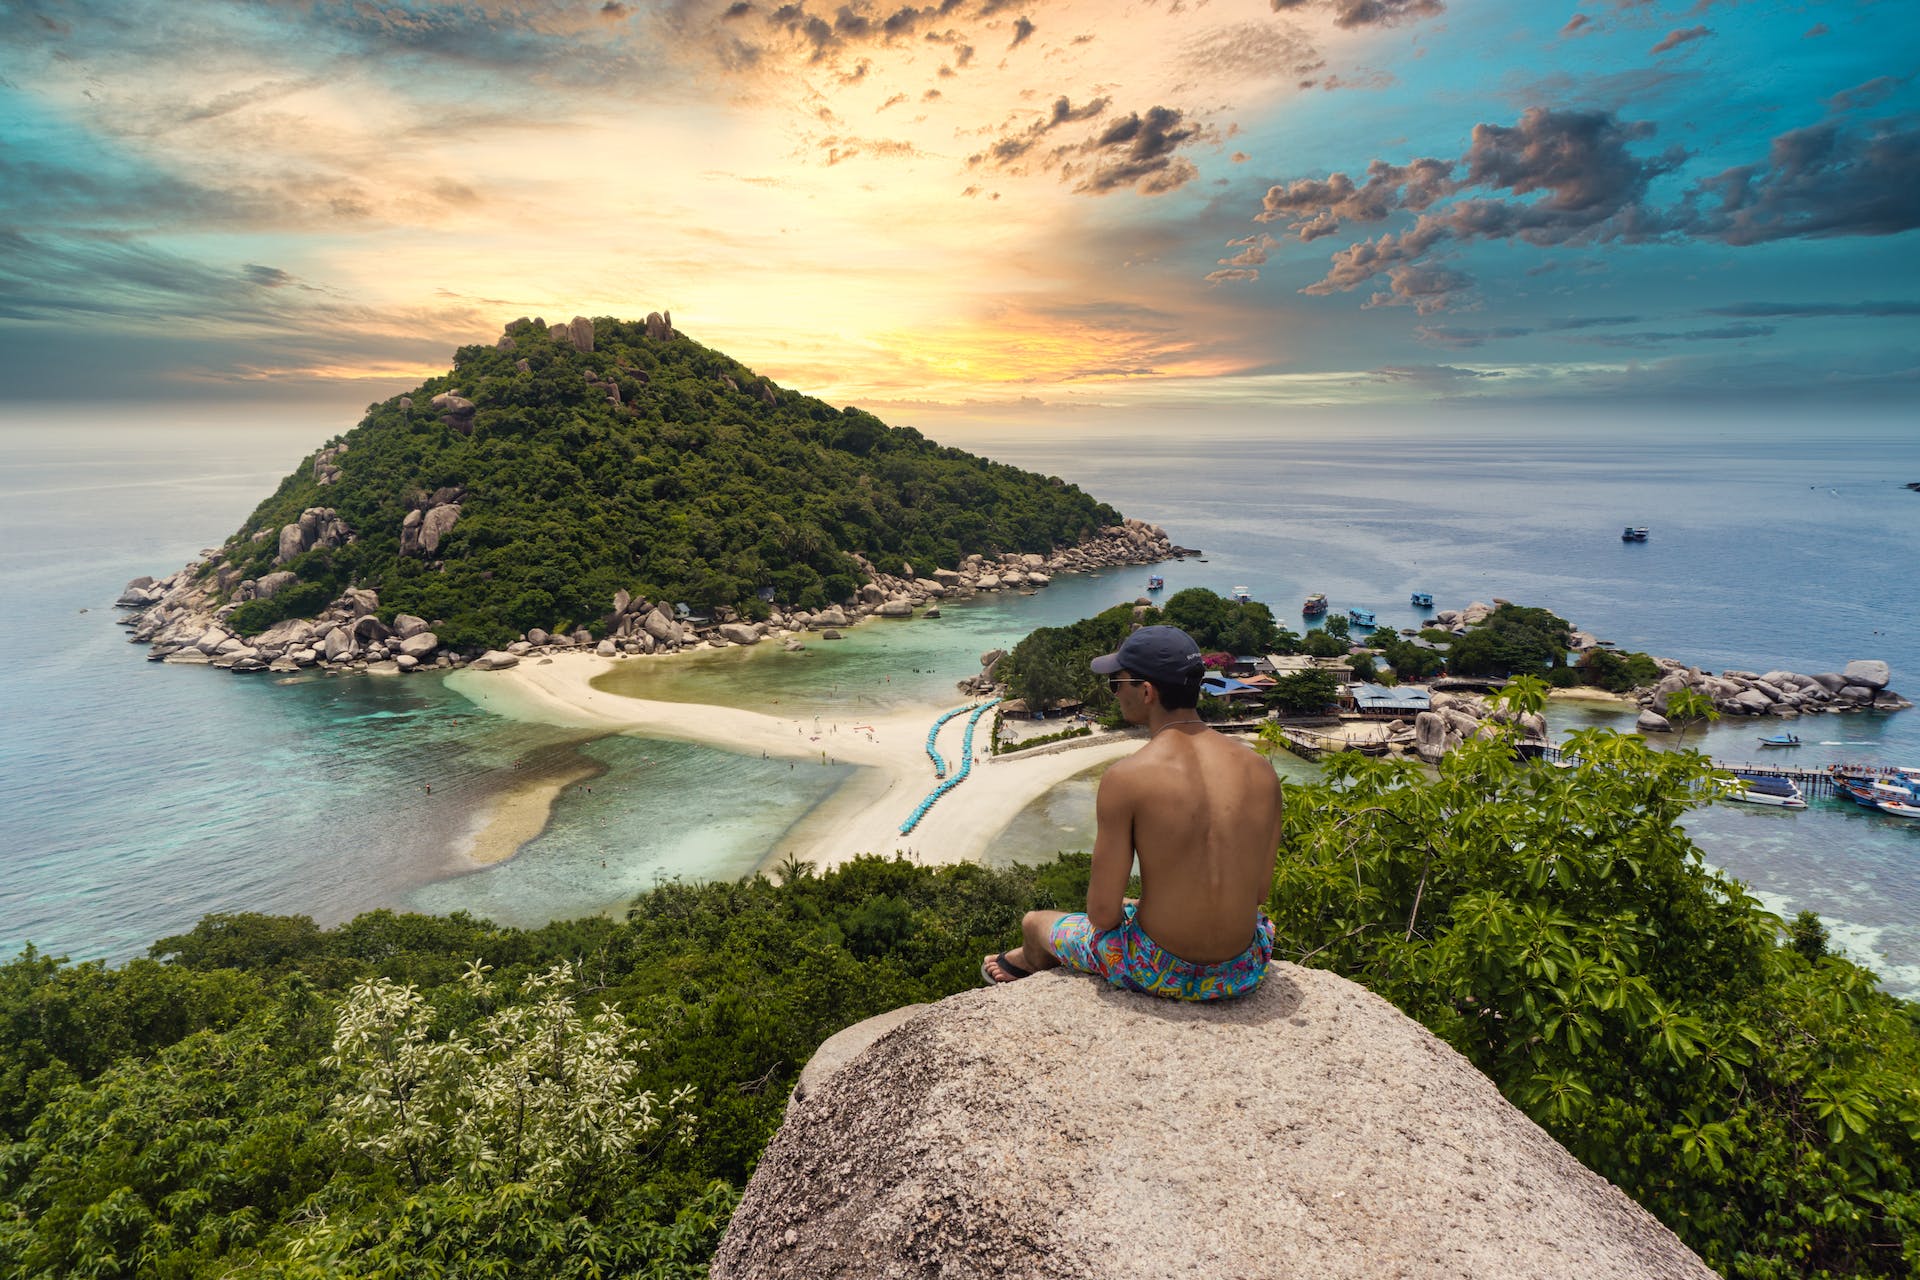 Scenic image of Thailand